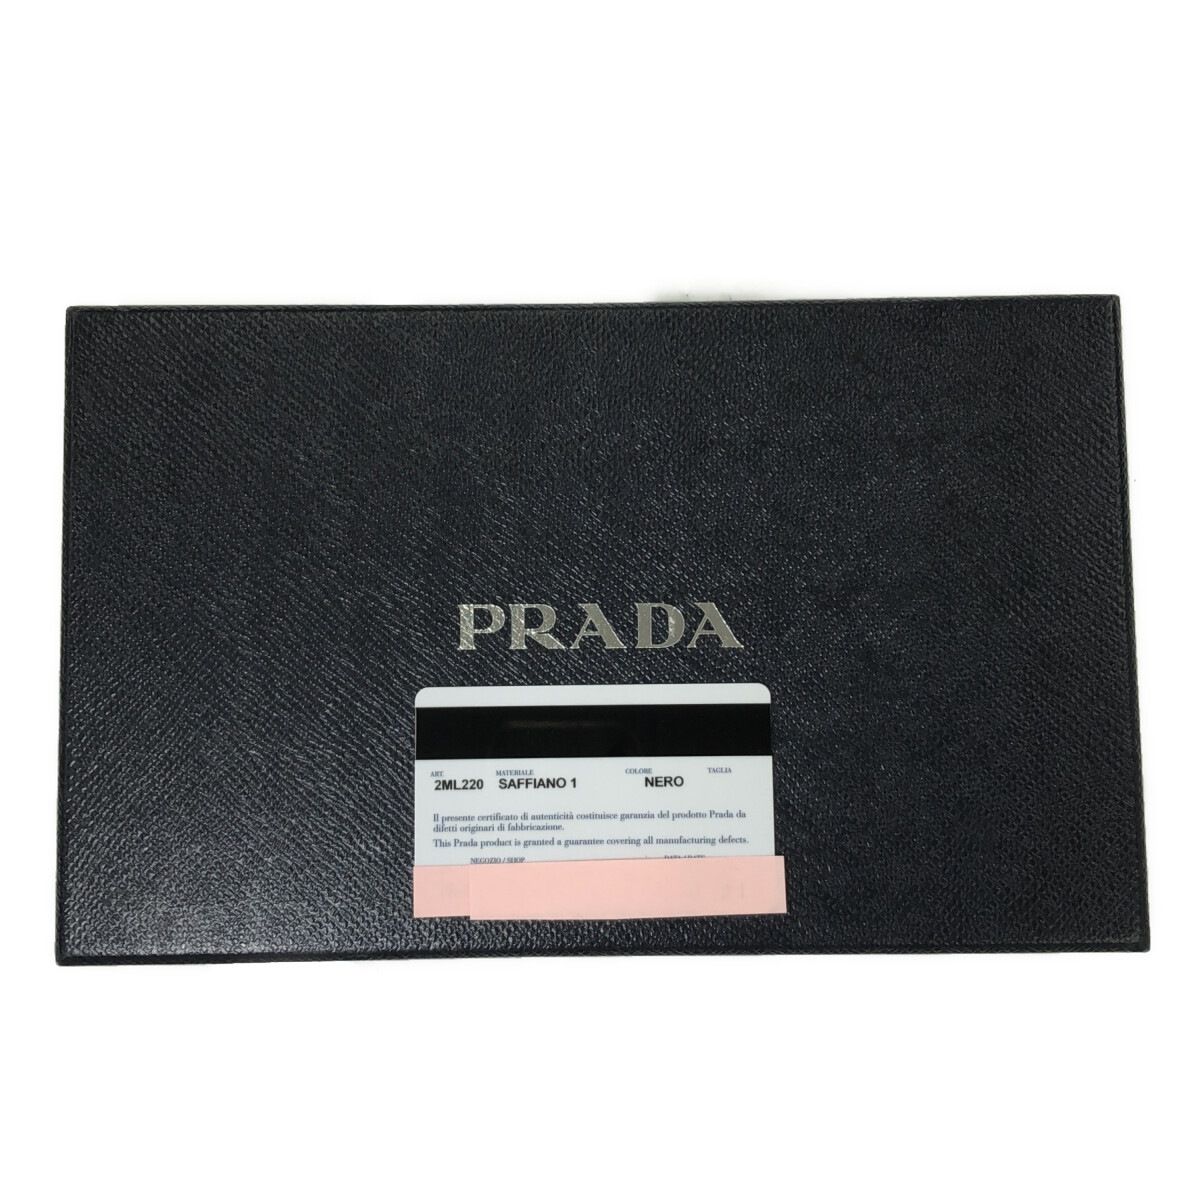 PRADA(プラダ) 長財布 - 2ML220 黒 ラウンドファスナー サフィアーノ ...